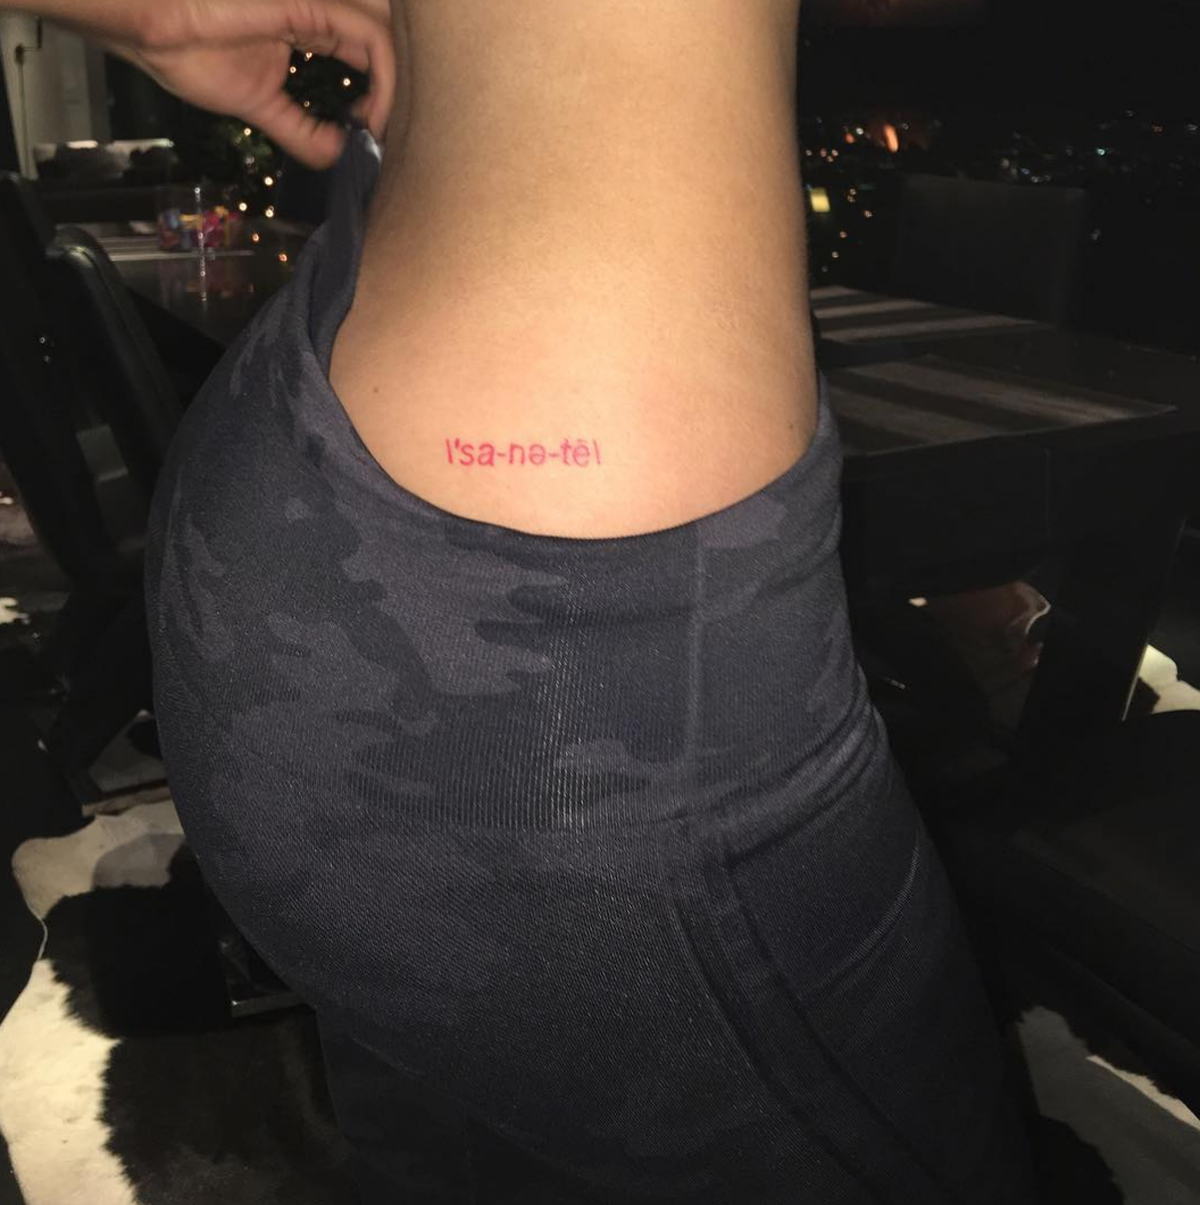 Kylie Jenner and Travis Scott Get Matching Butterfly Tattoos